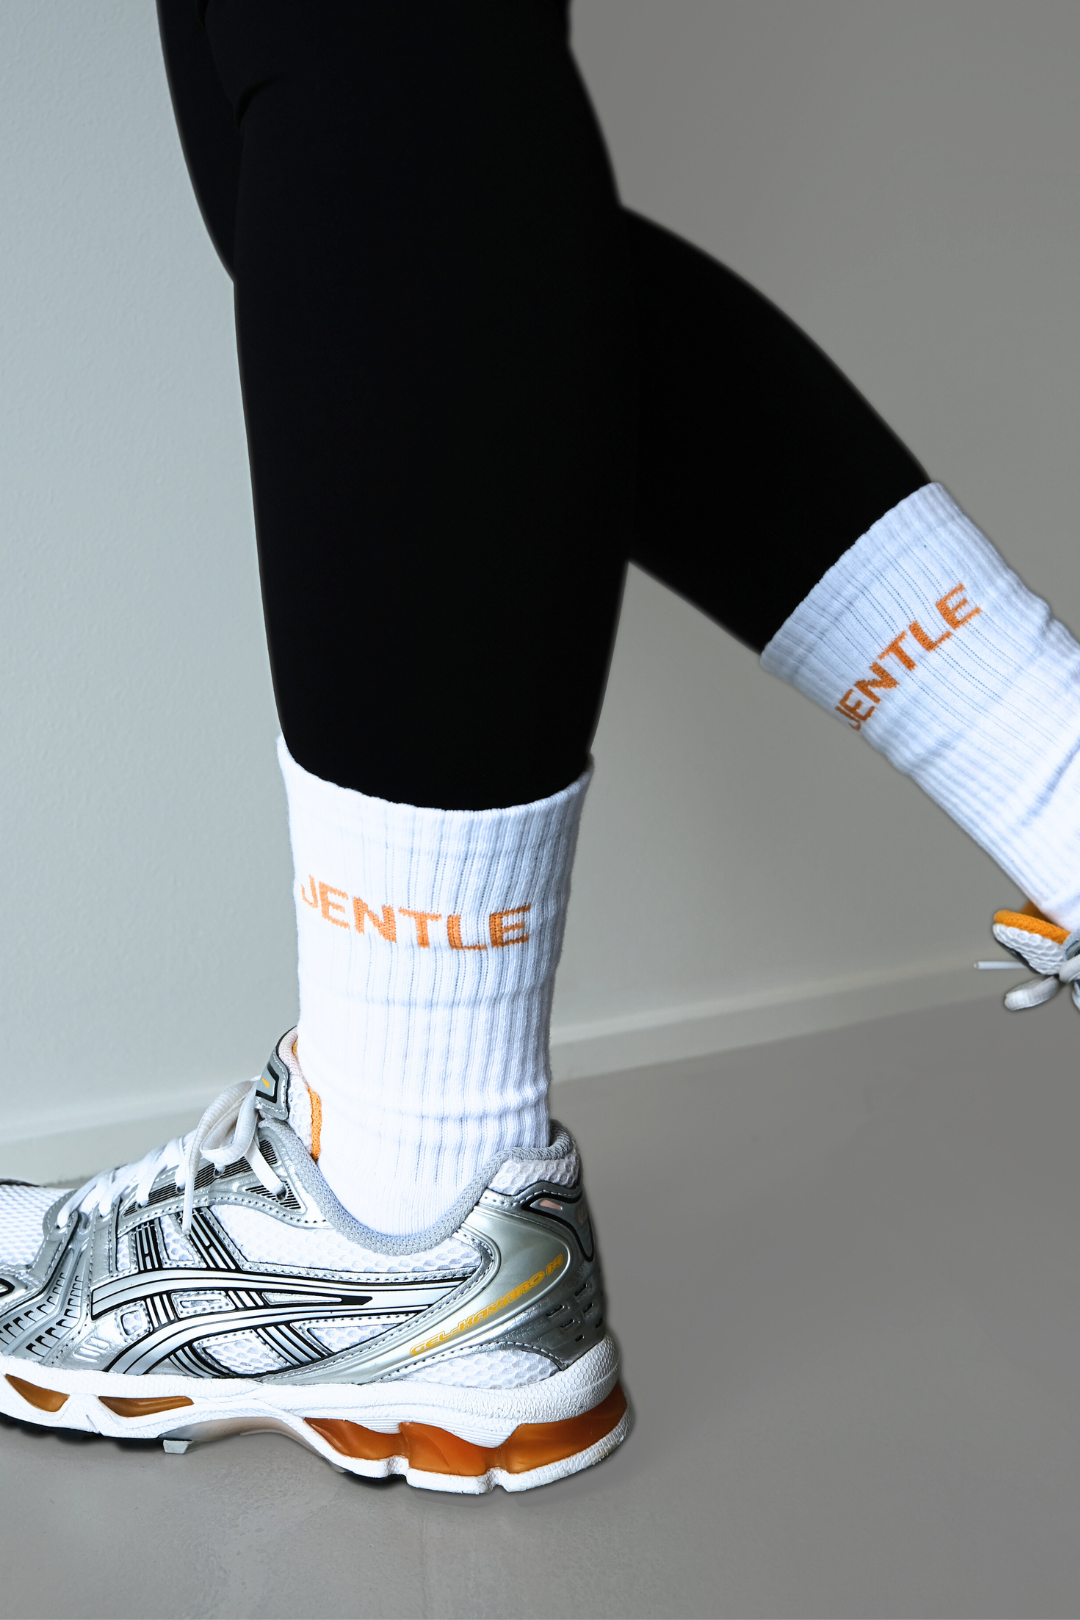 Jentle - Birthday Socks (Orange)